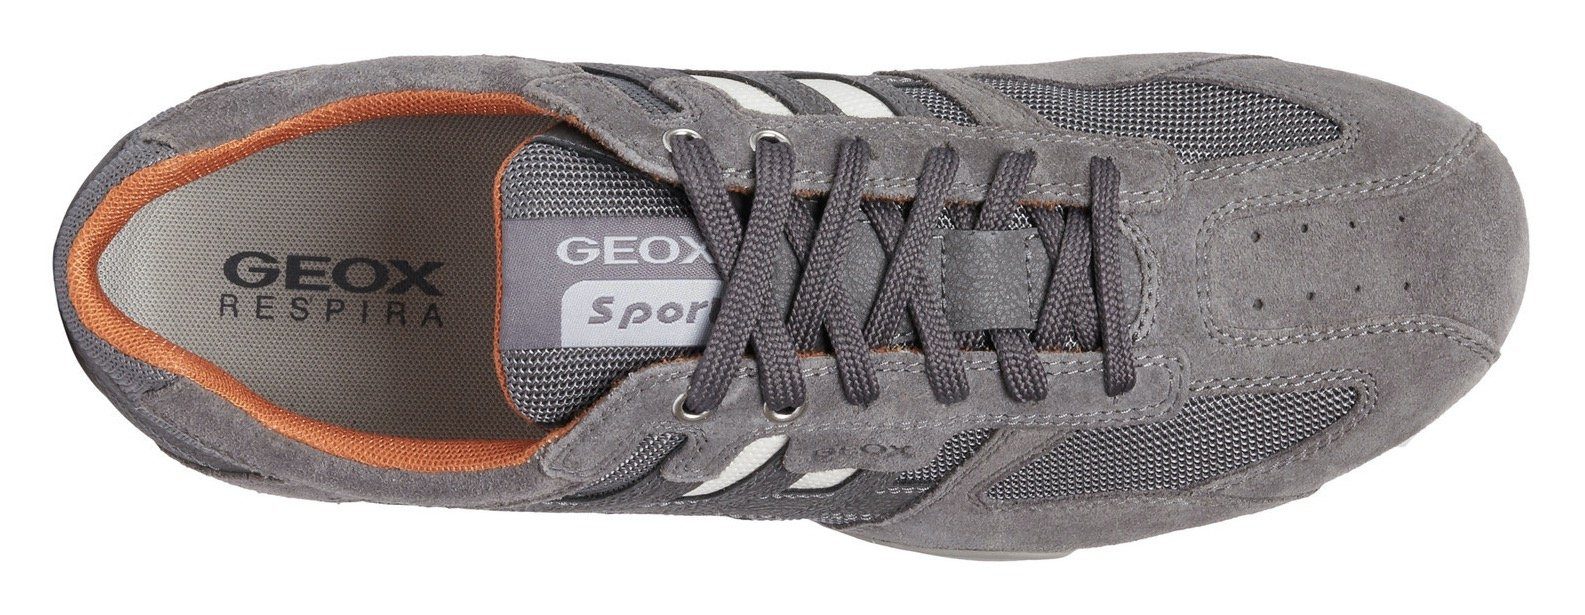 Geox Sneaker Materialmix mit orange Membrane Spezial im weiß, hellgrau, Geox Snake